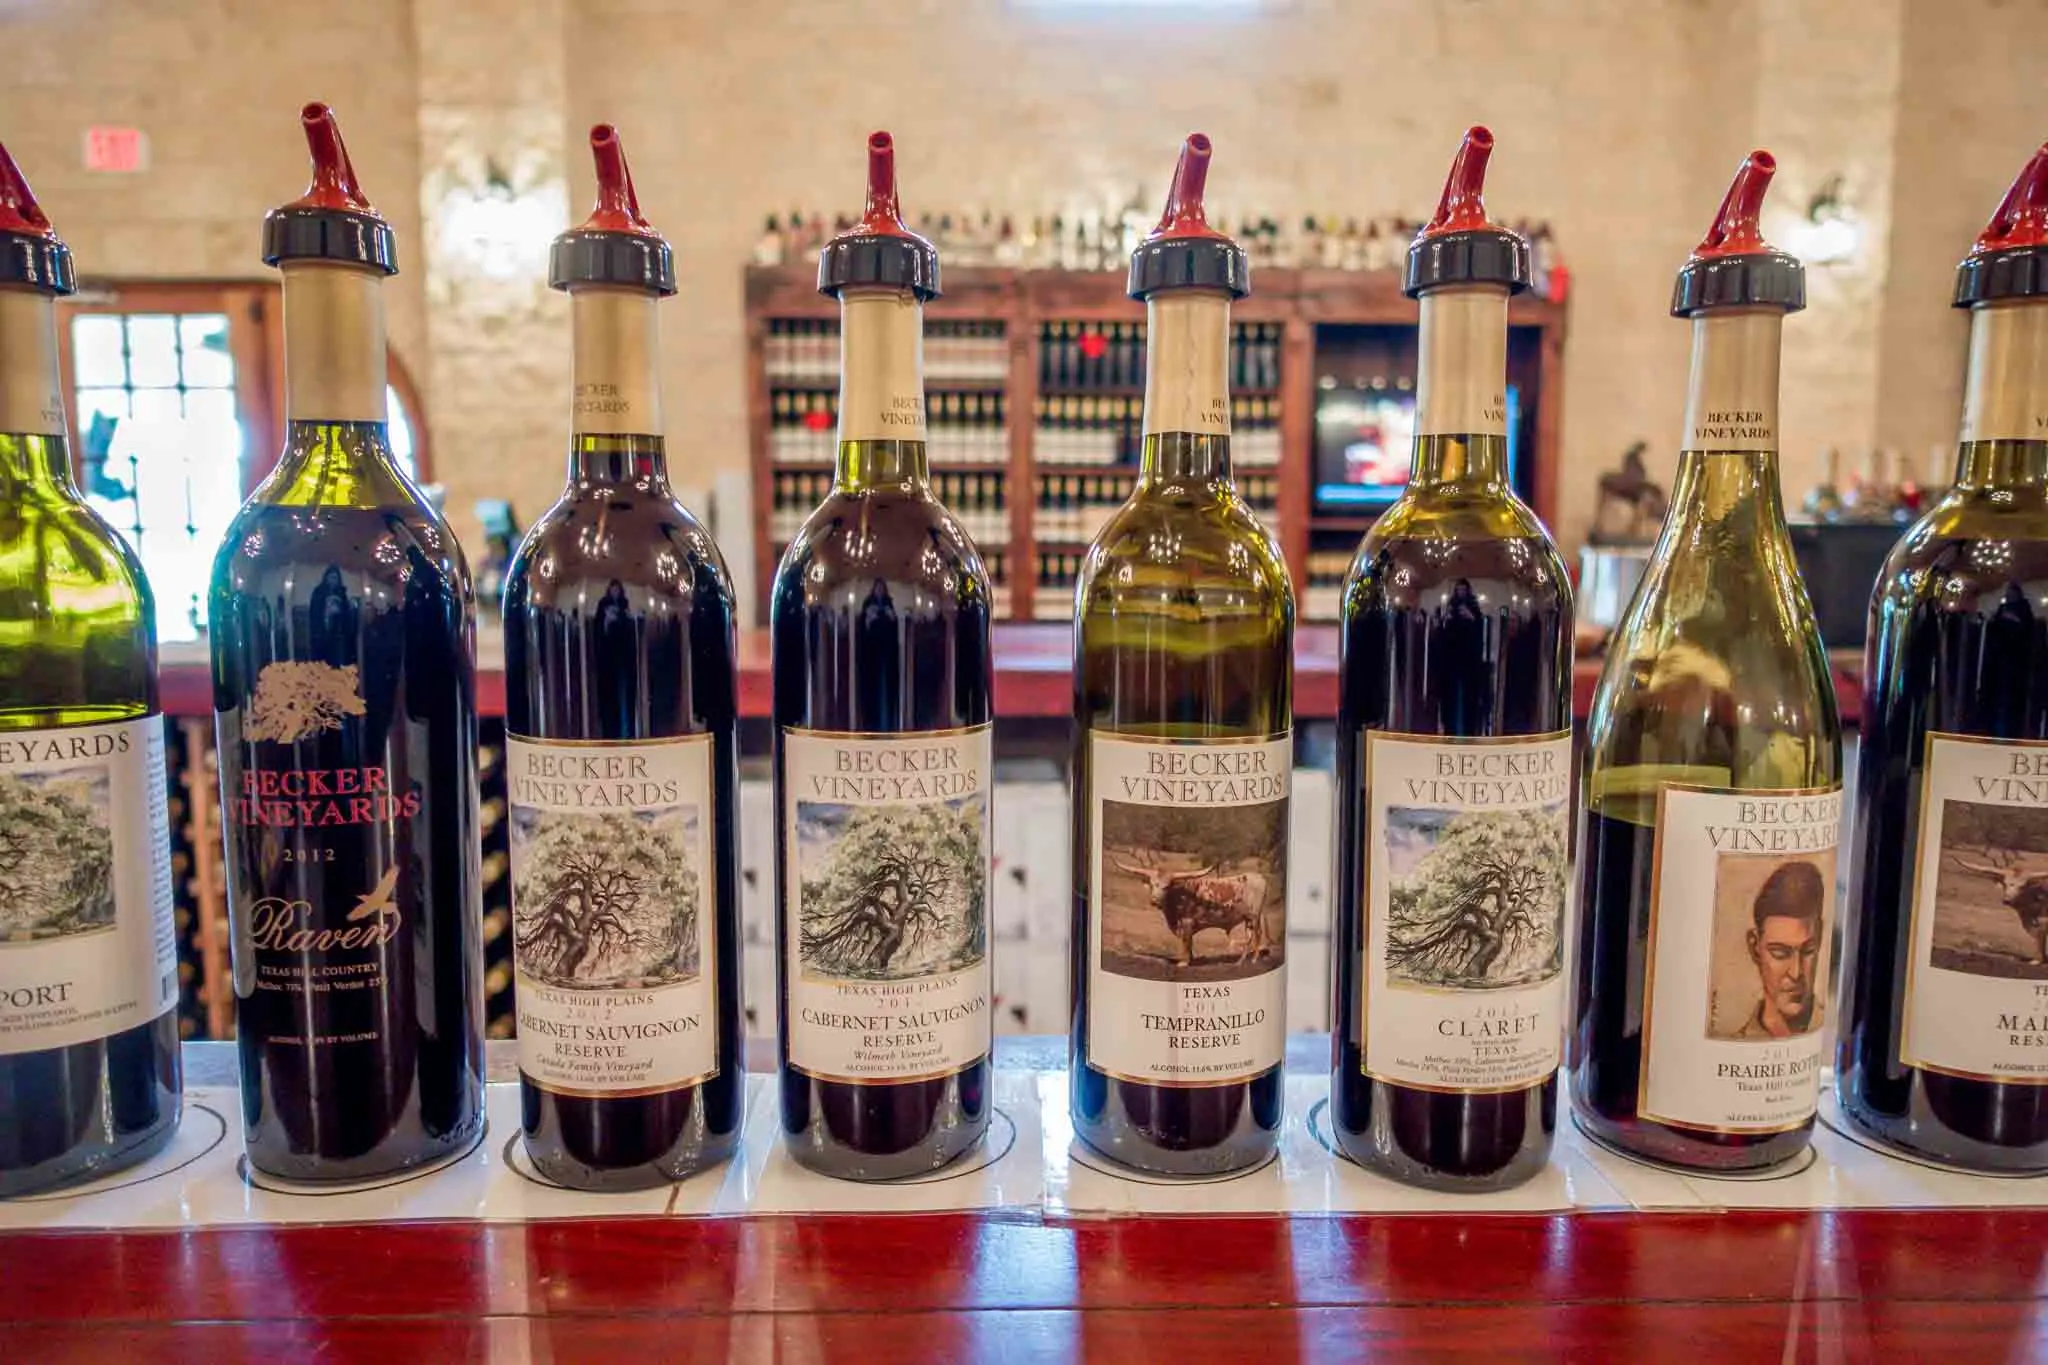 Wine bottles from Becker Vineyards, one of the largest Fredericksburg wineries.